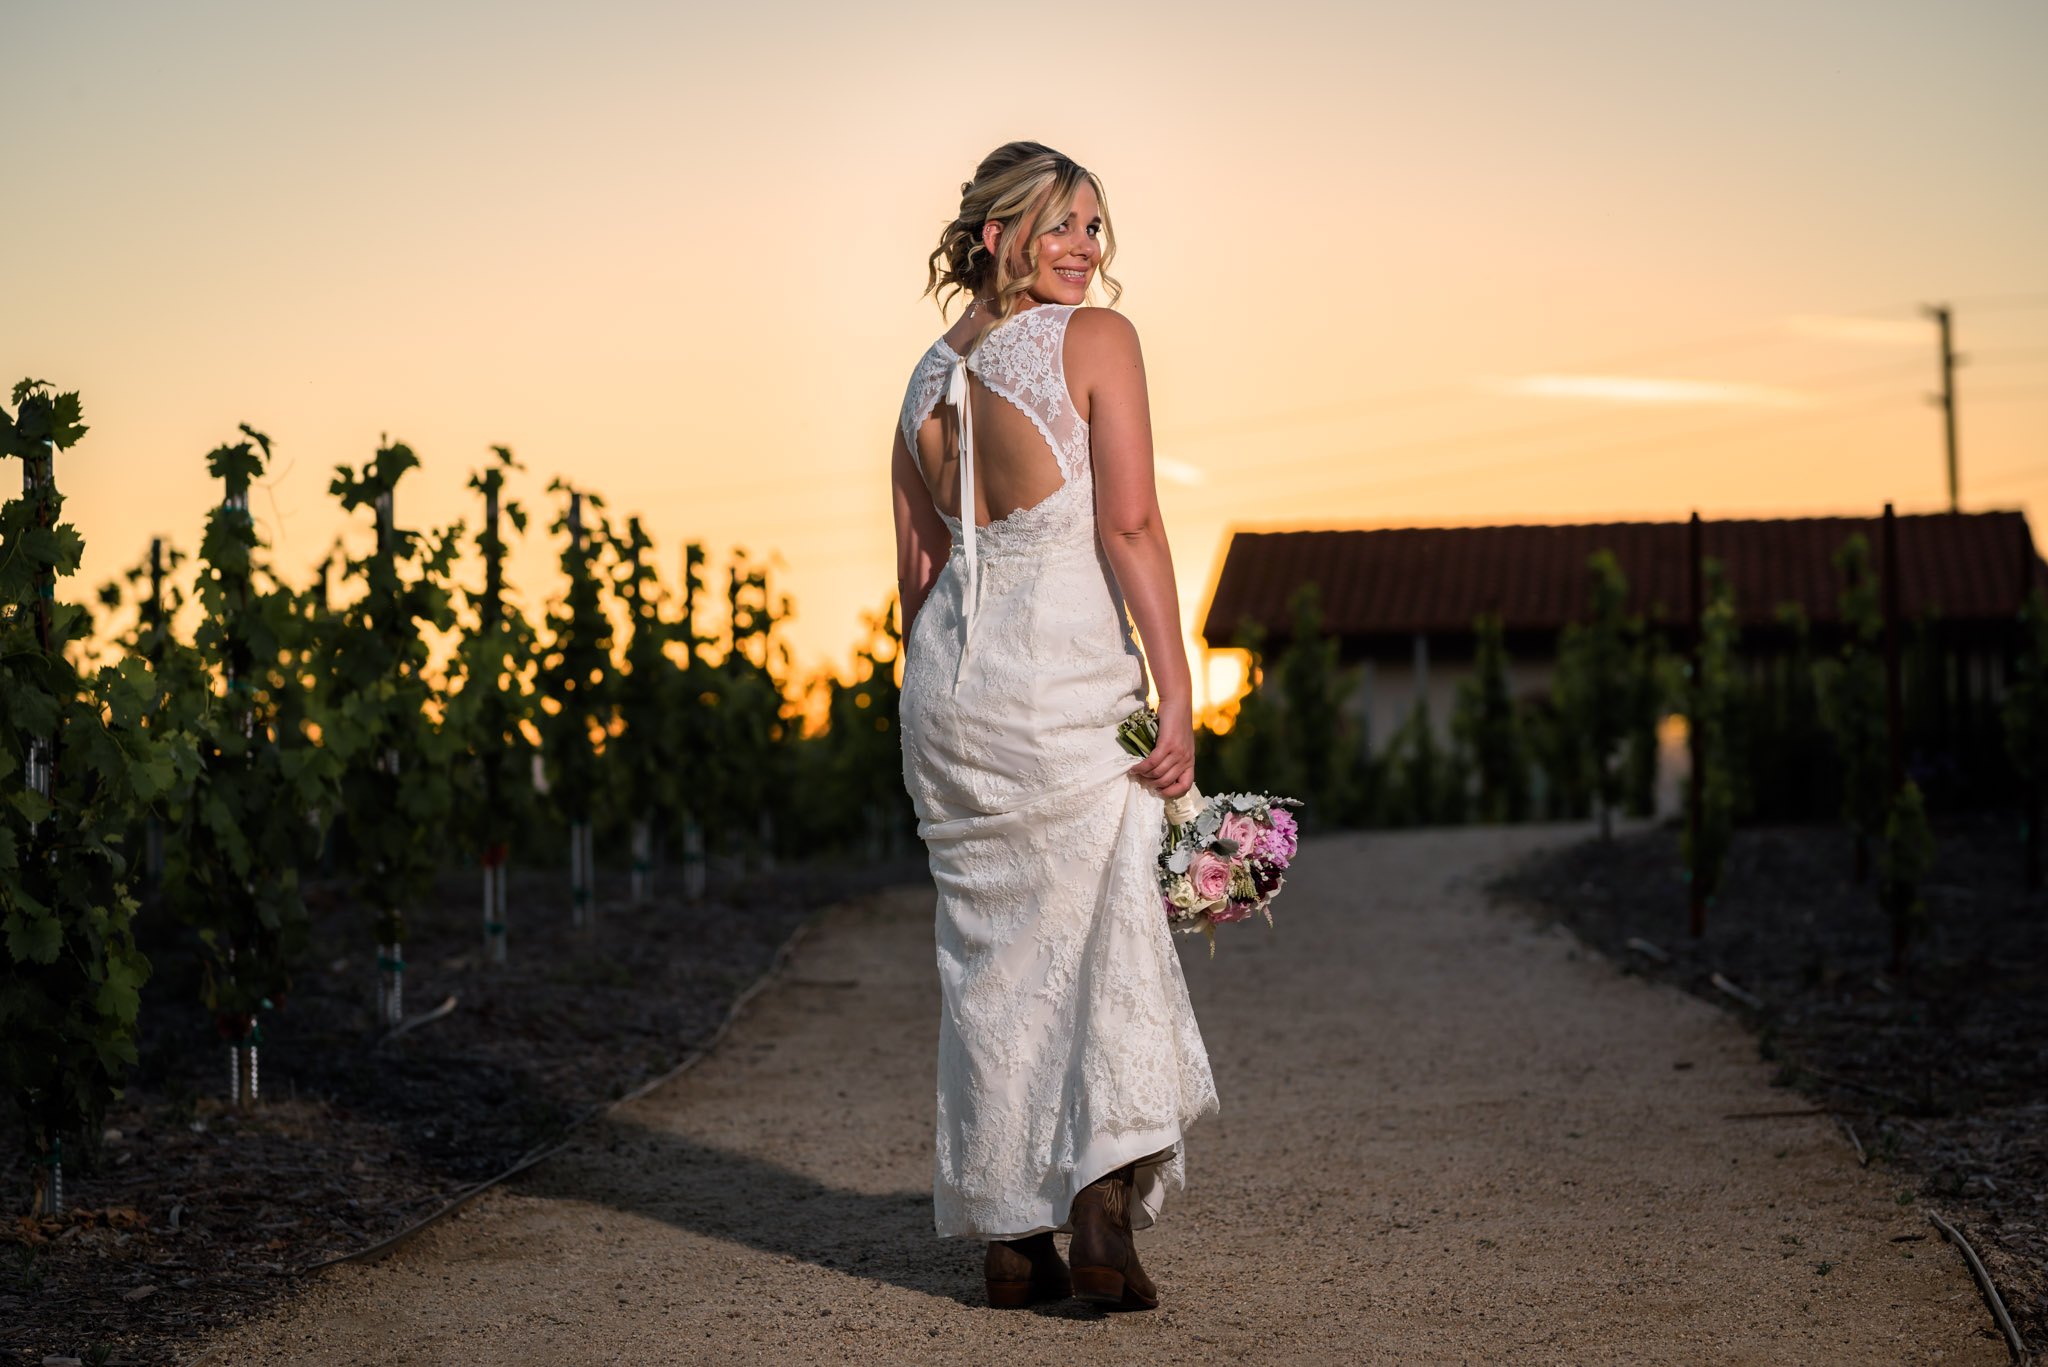 Avensole-Winery-Temecula-Wedding-Josh-and-Olivia-3833.JPG